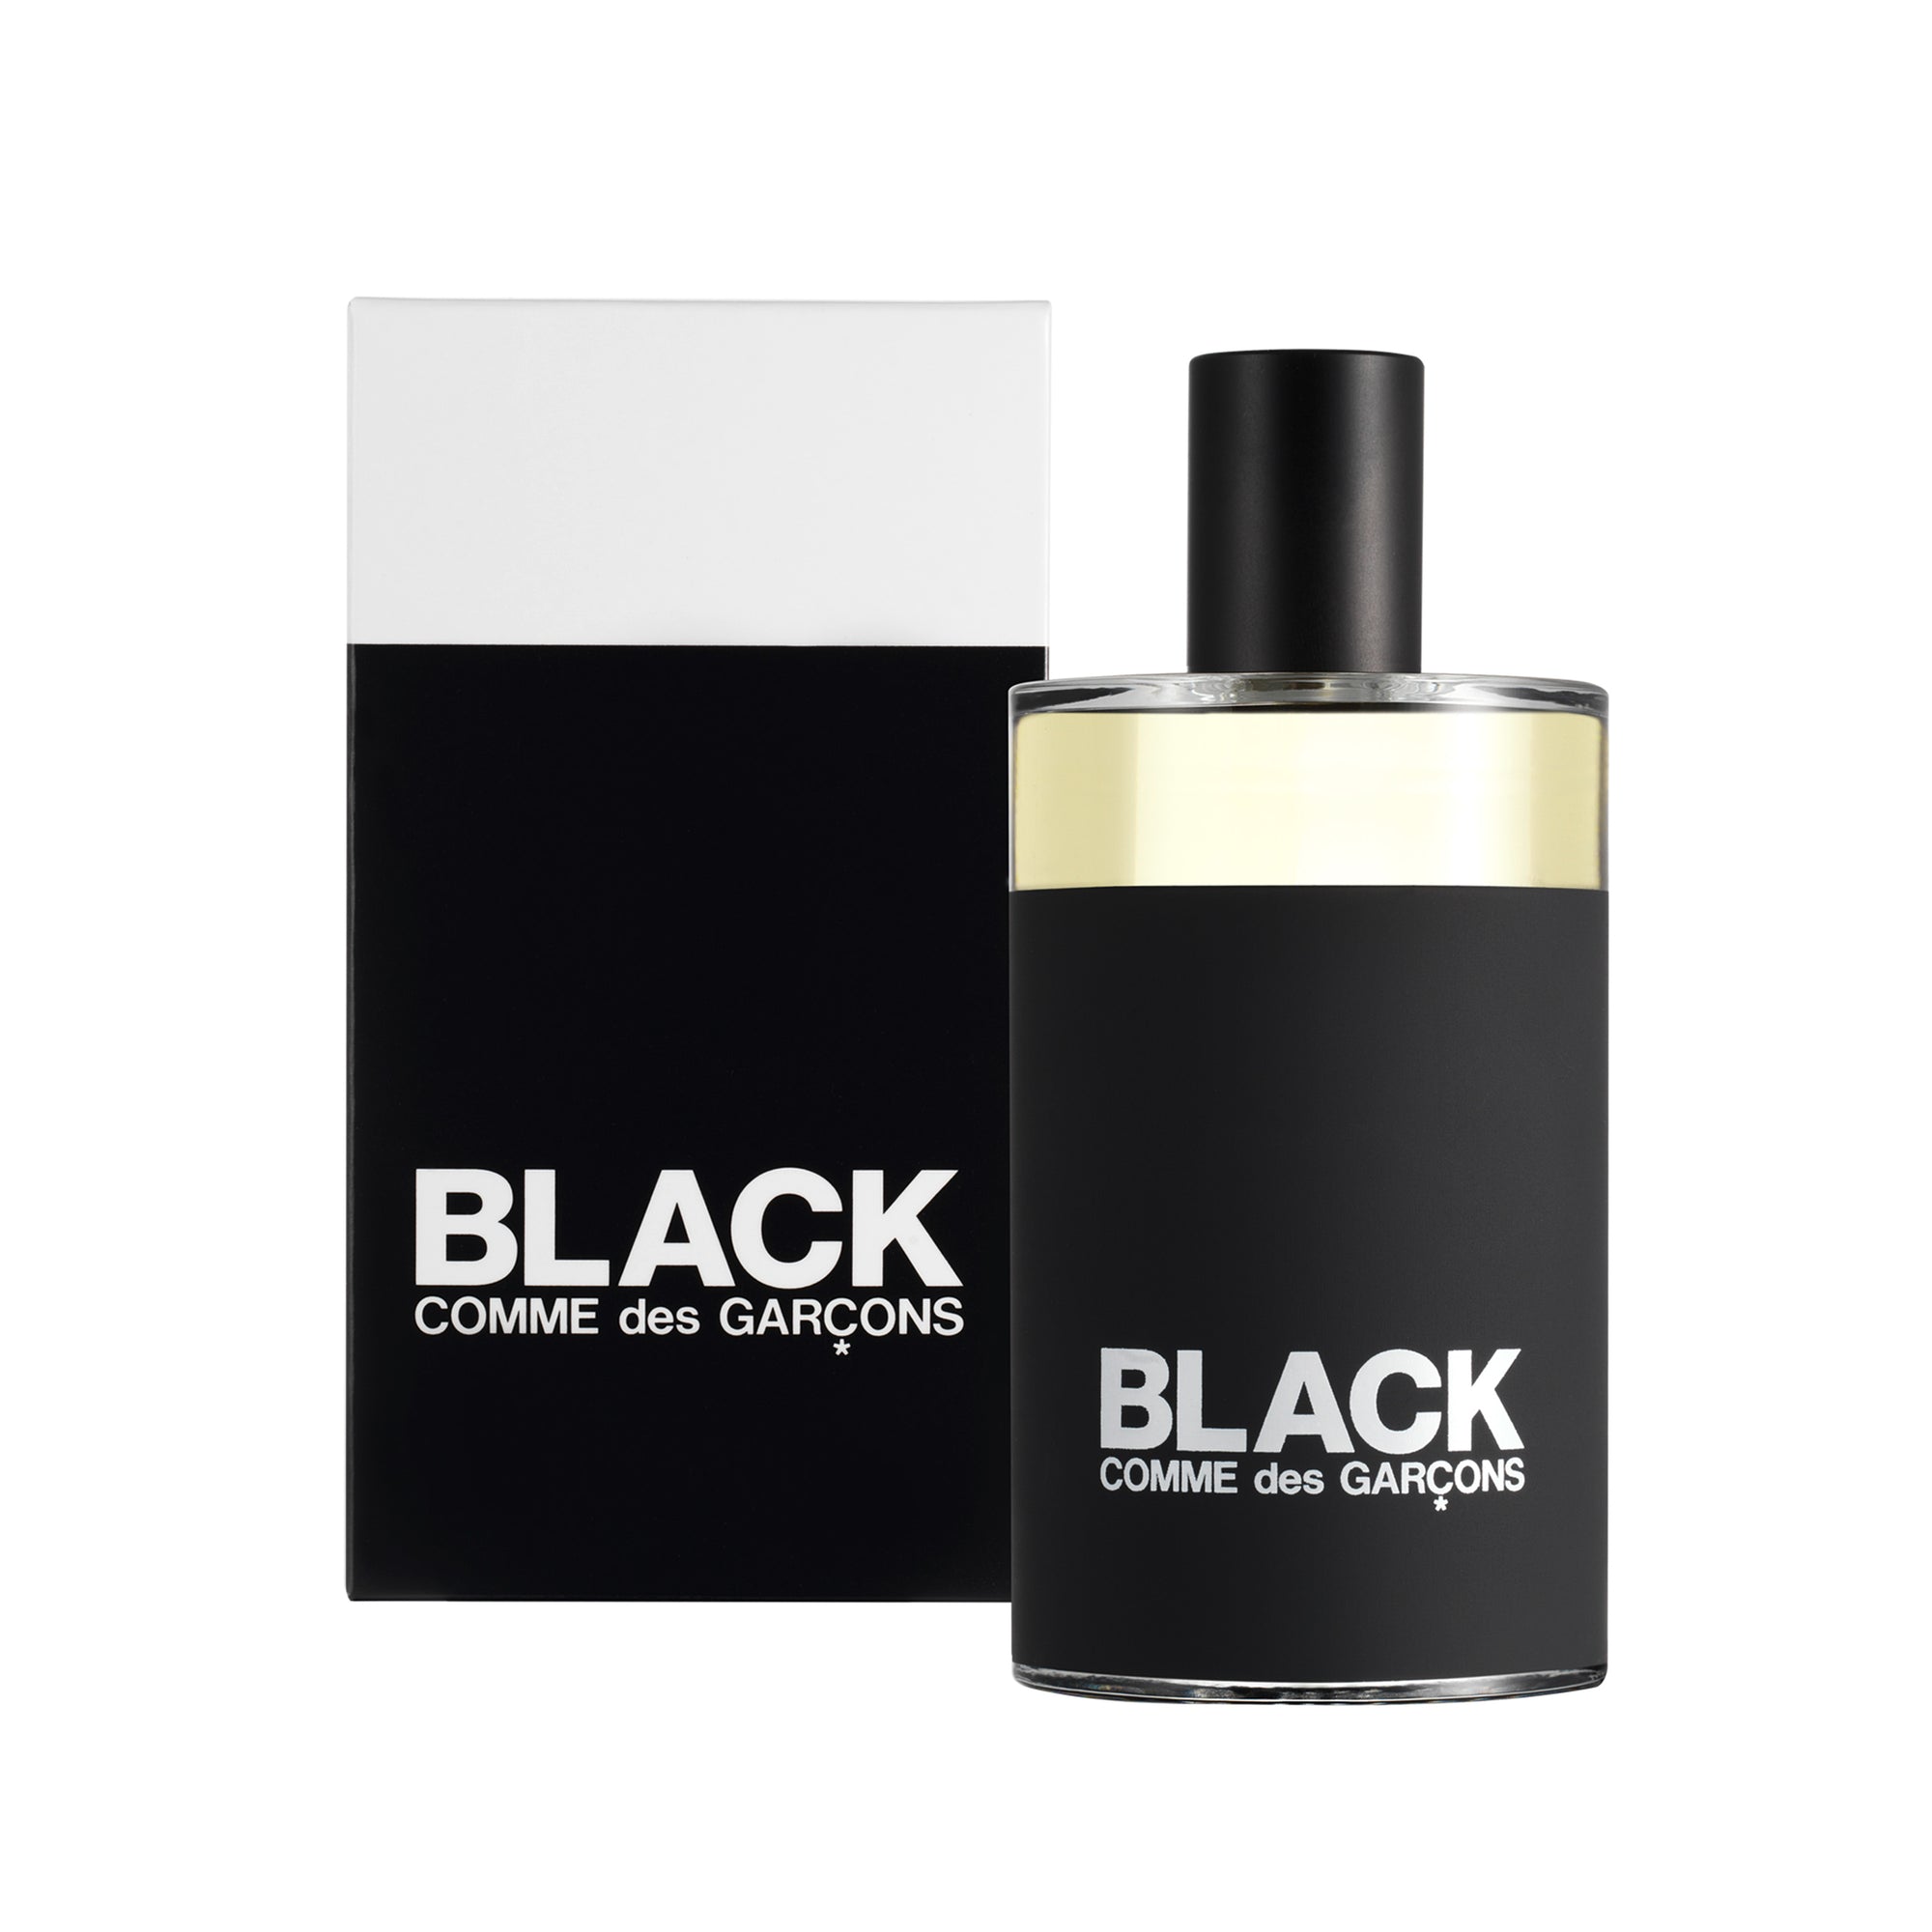 CDG Parfum - BLACK Comme des Garçons - 100ml natural spray view 2